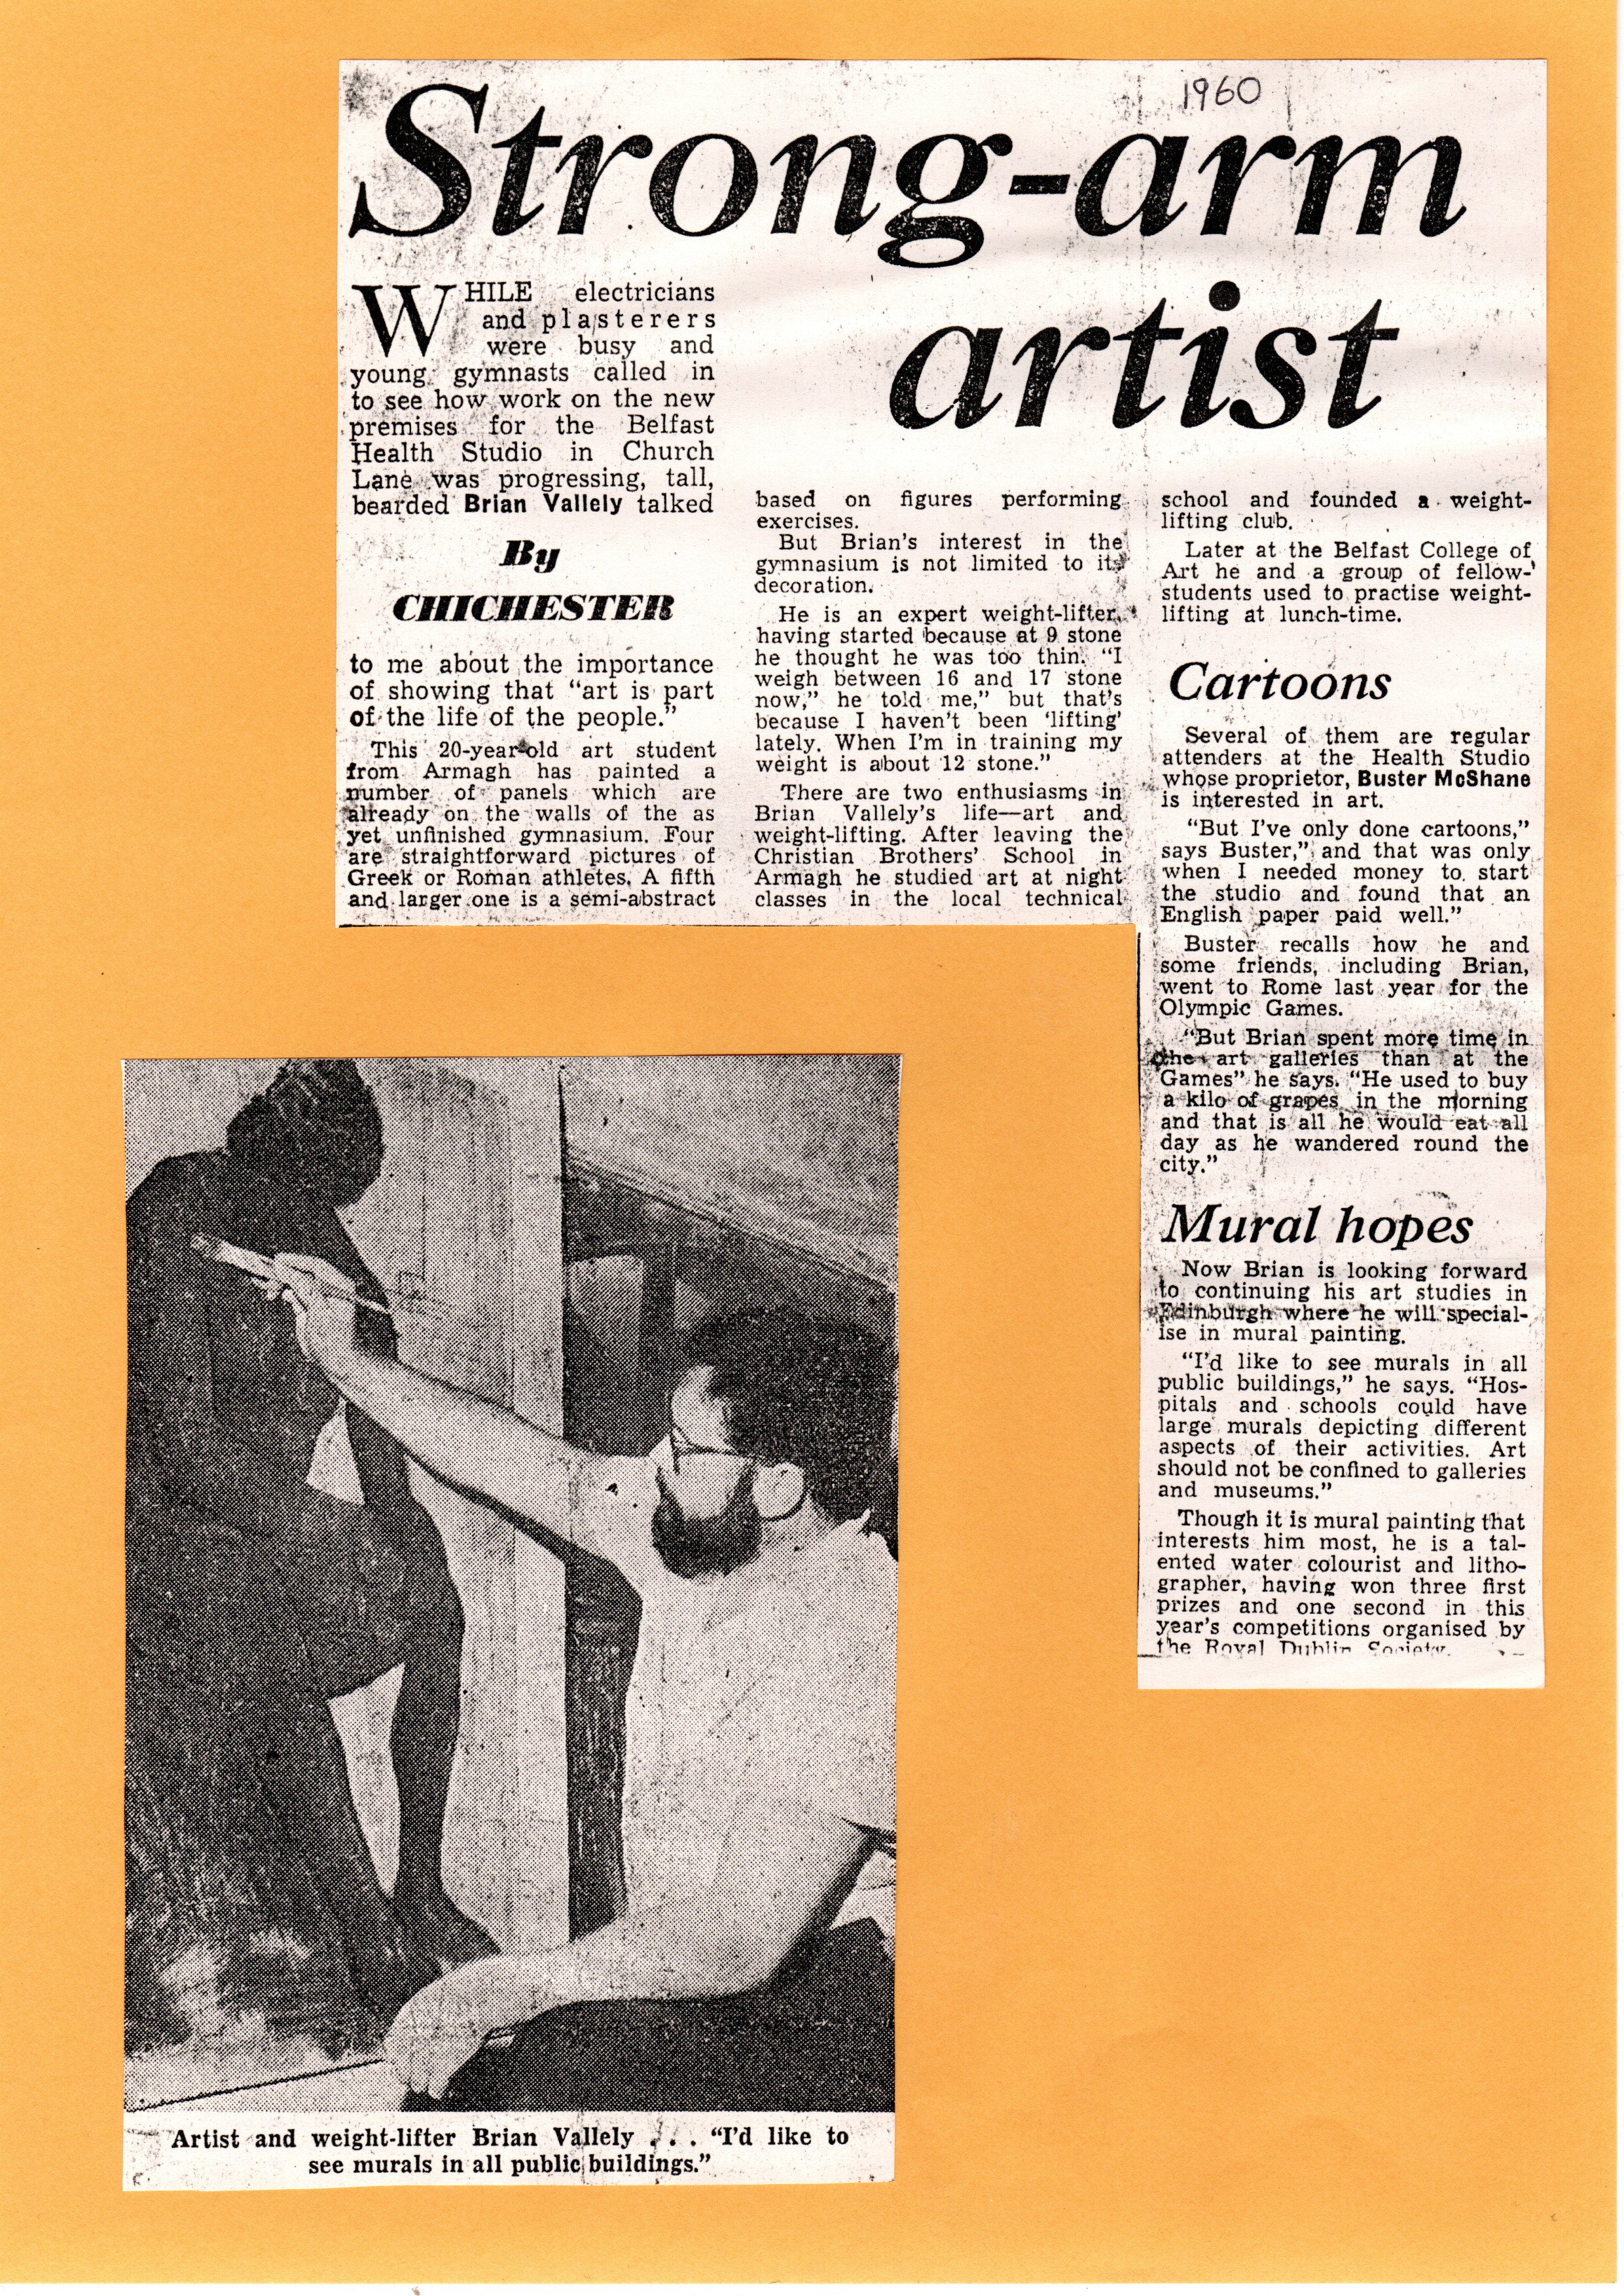 newspaper article 1960